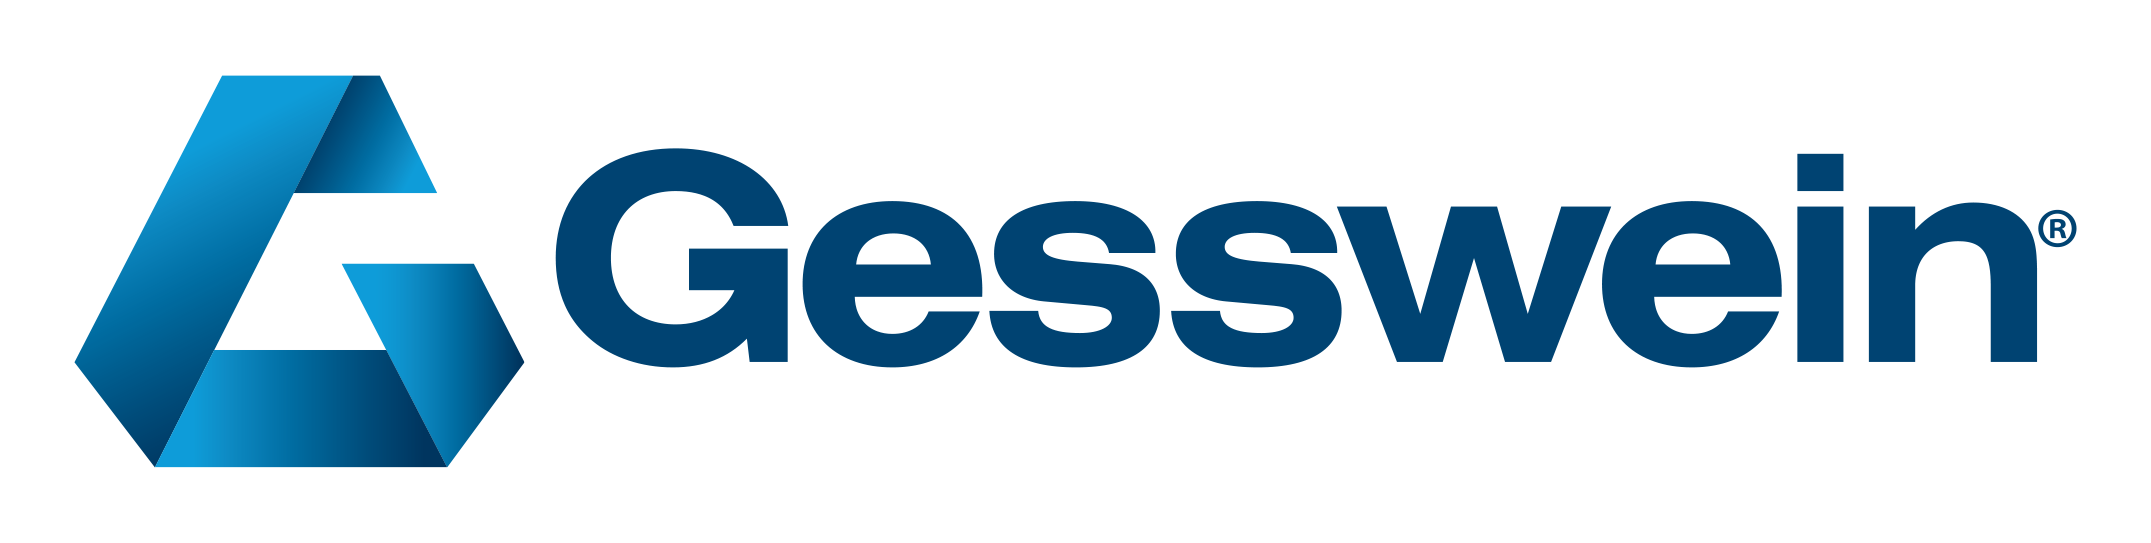 Paul H. Gesswein Co., Inc. logo